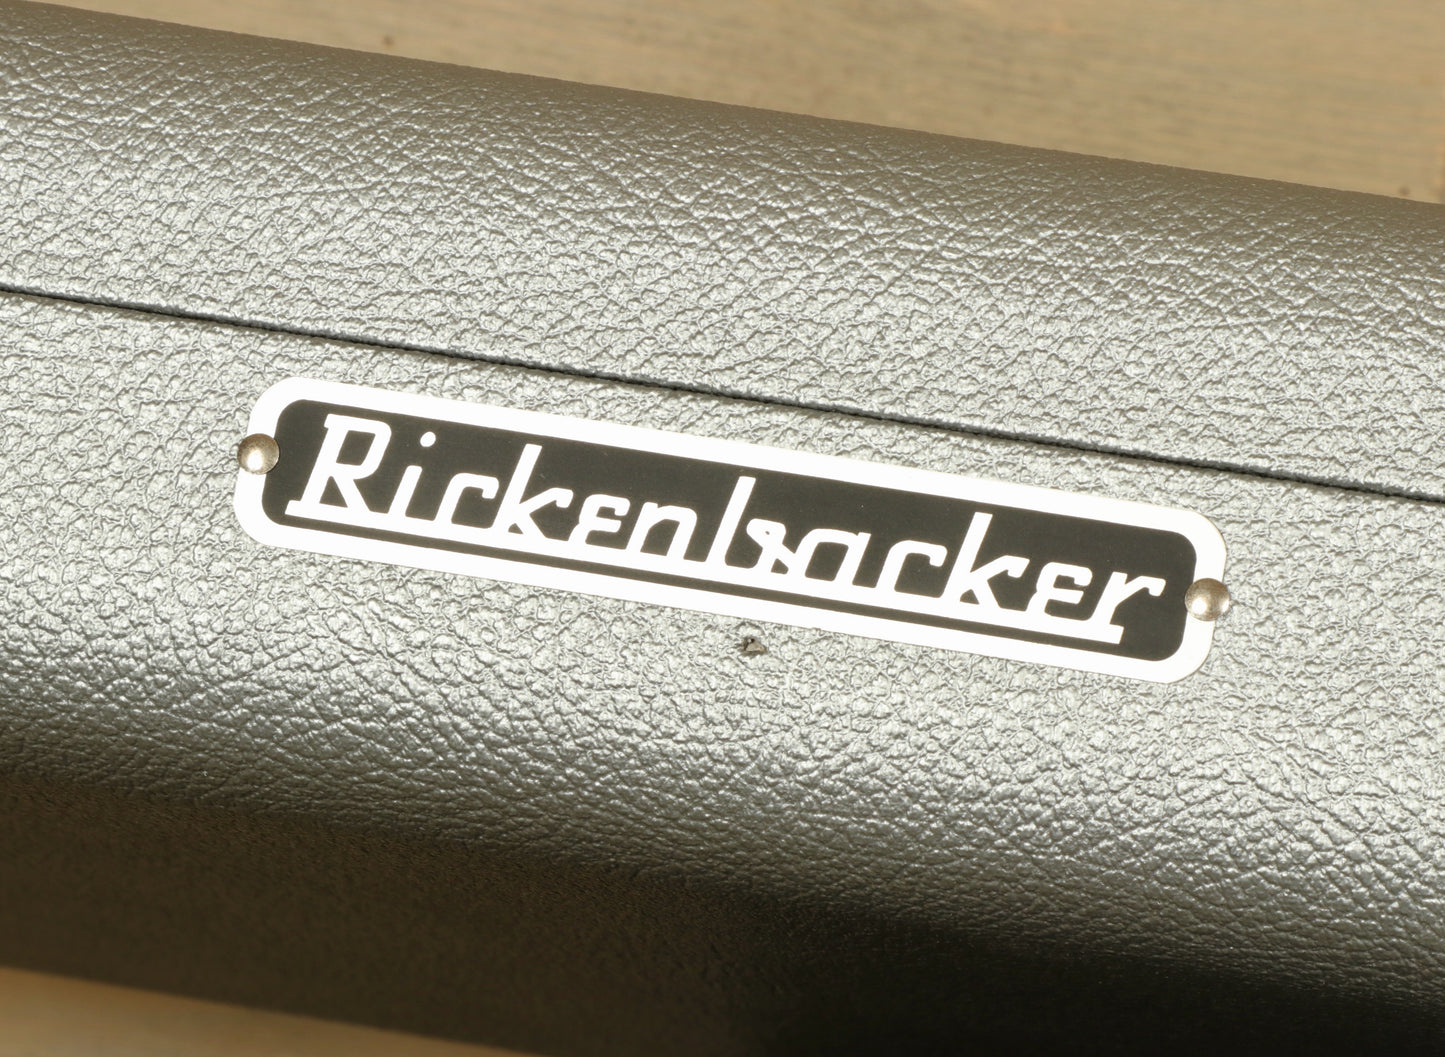 Rickenbacker Vintage Reissue Silver Case - 4000 Series Basses (USED)